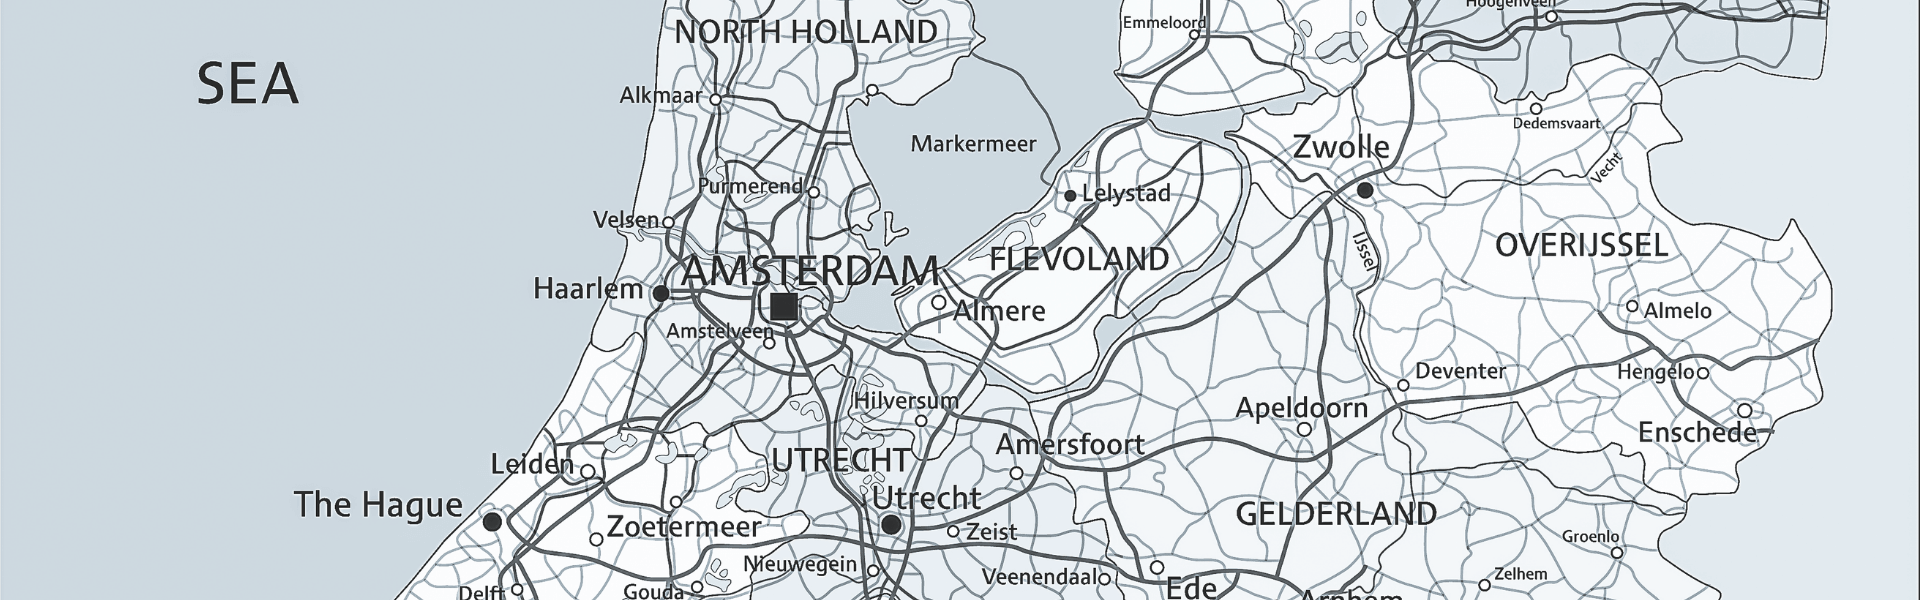 Regiokalender Midden-Nederland - IMK Opleidingen